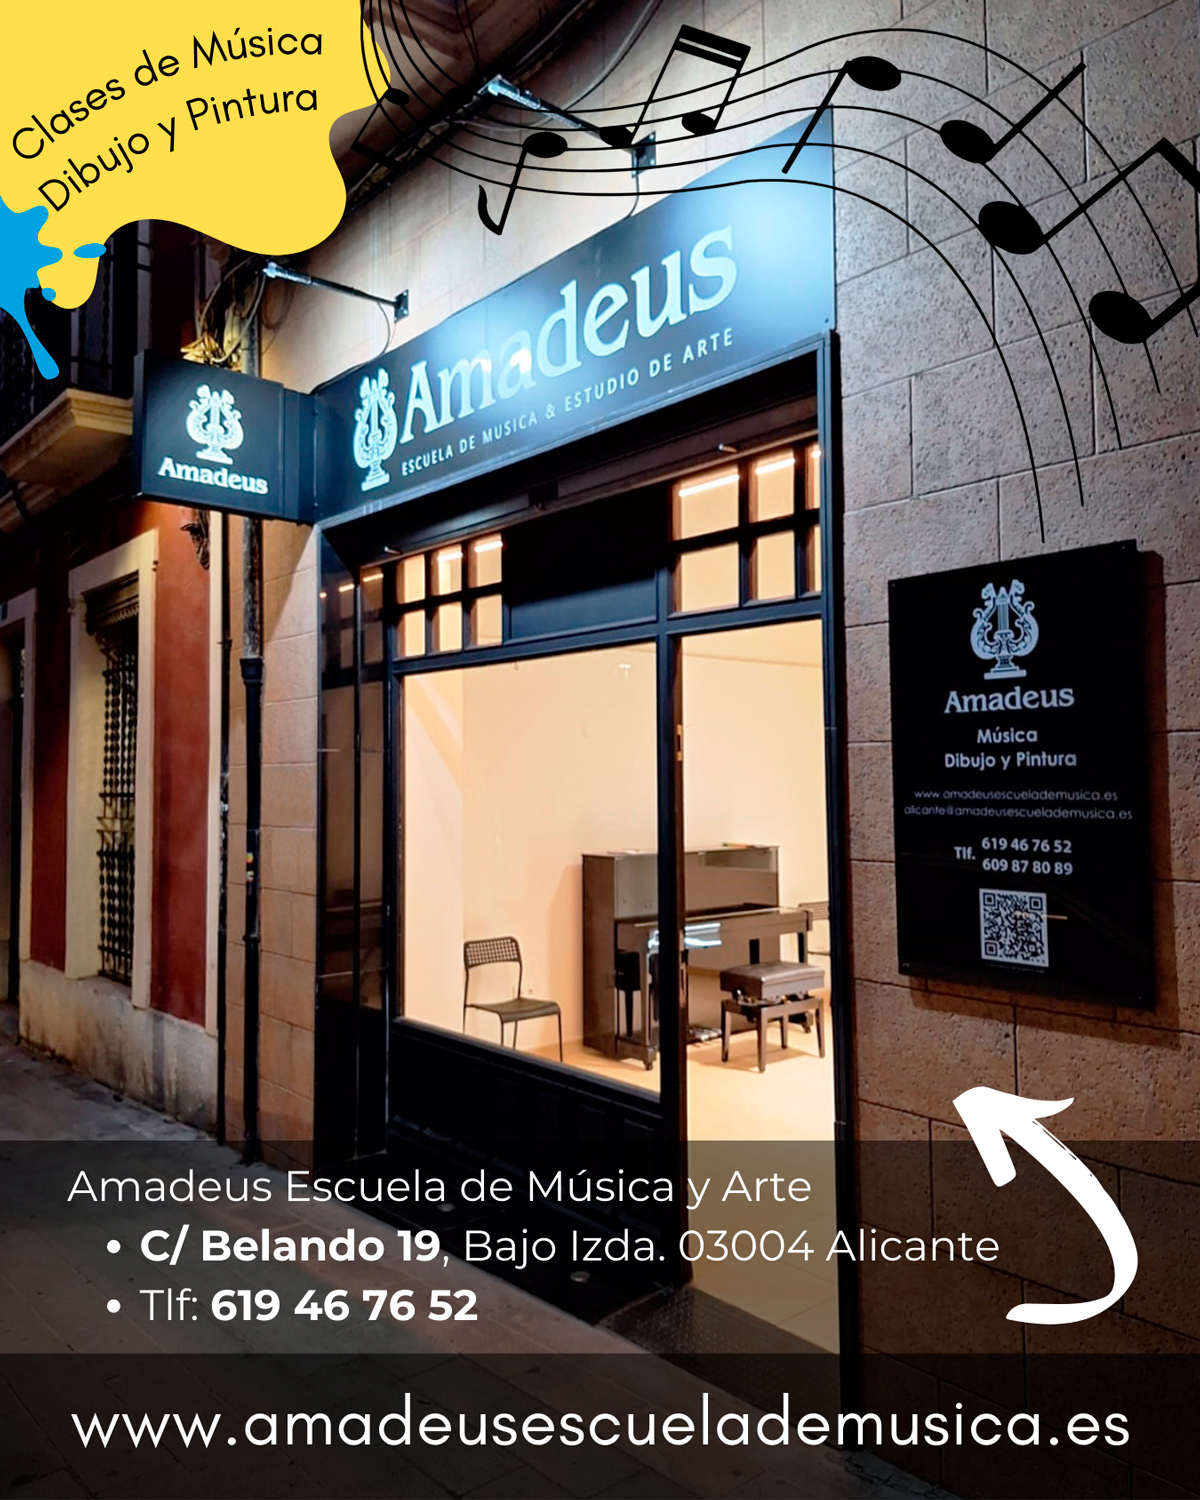 Amadeus Calle Belando 19, Alicante